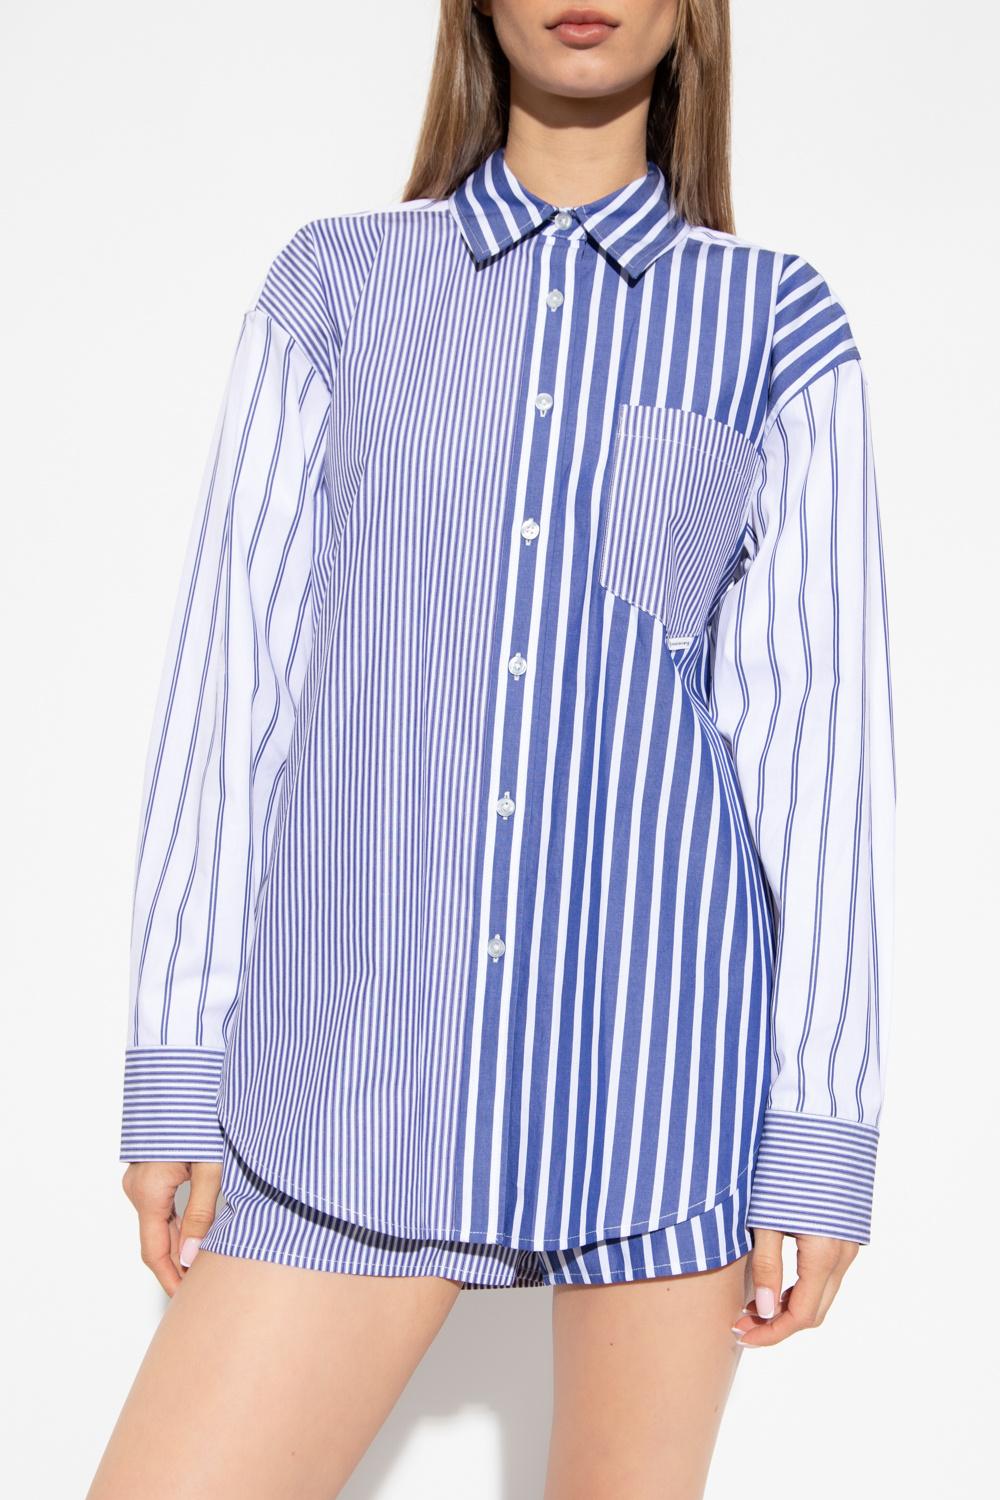 T By Wang Striped Shirt in